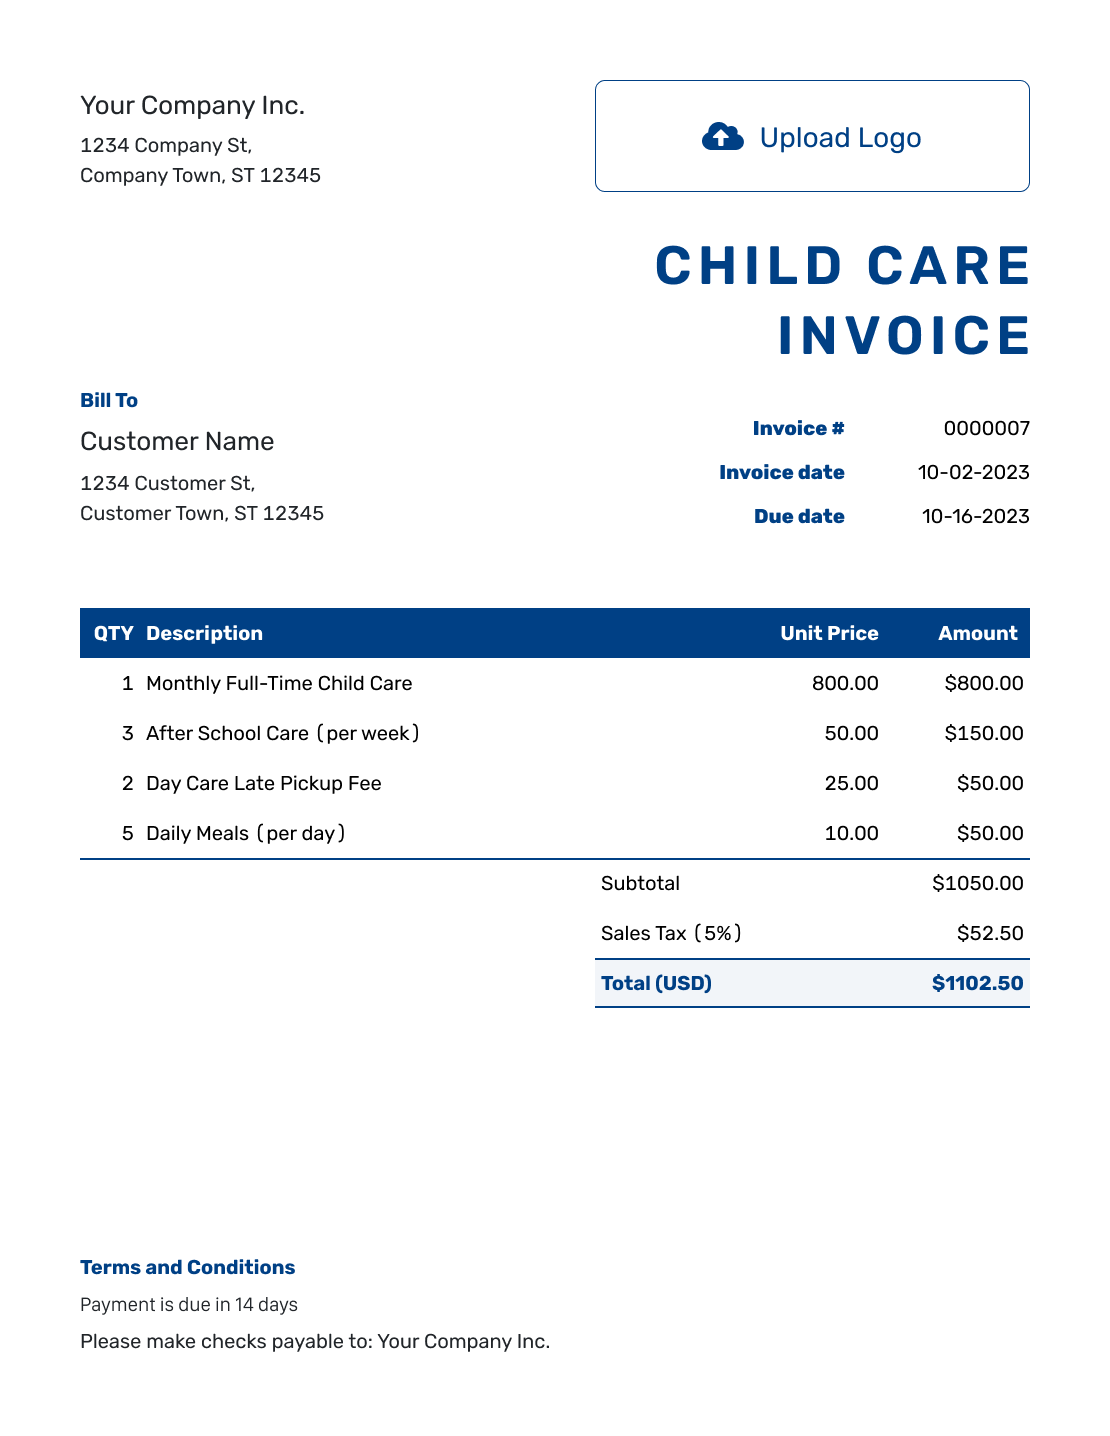 Sample Child Care Invoice Template